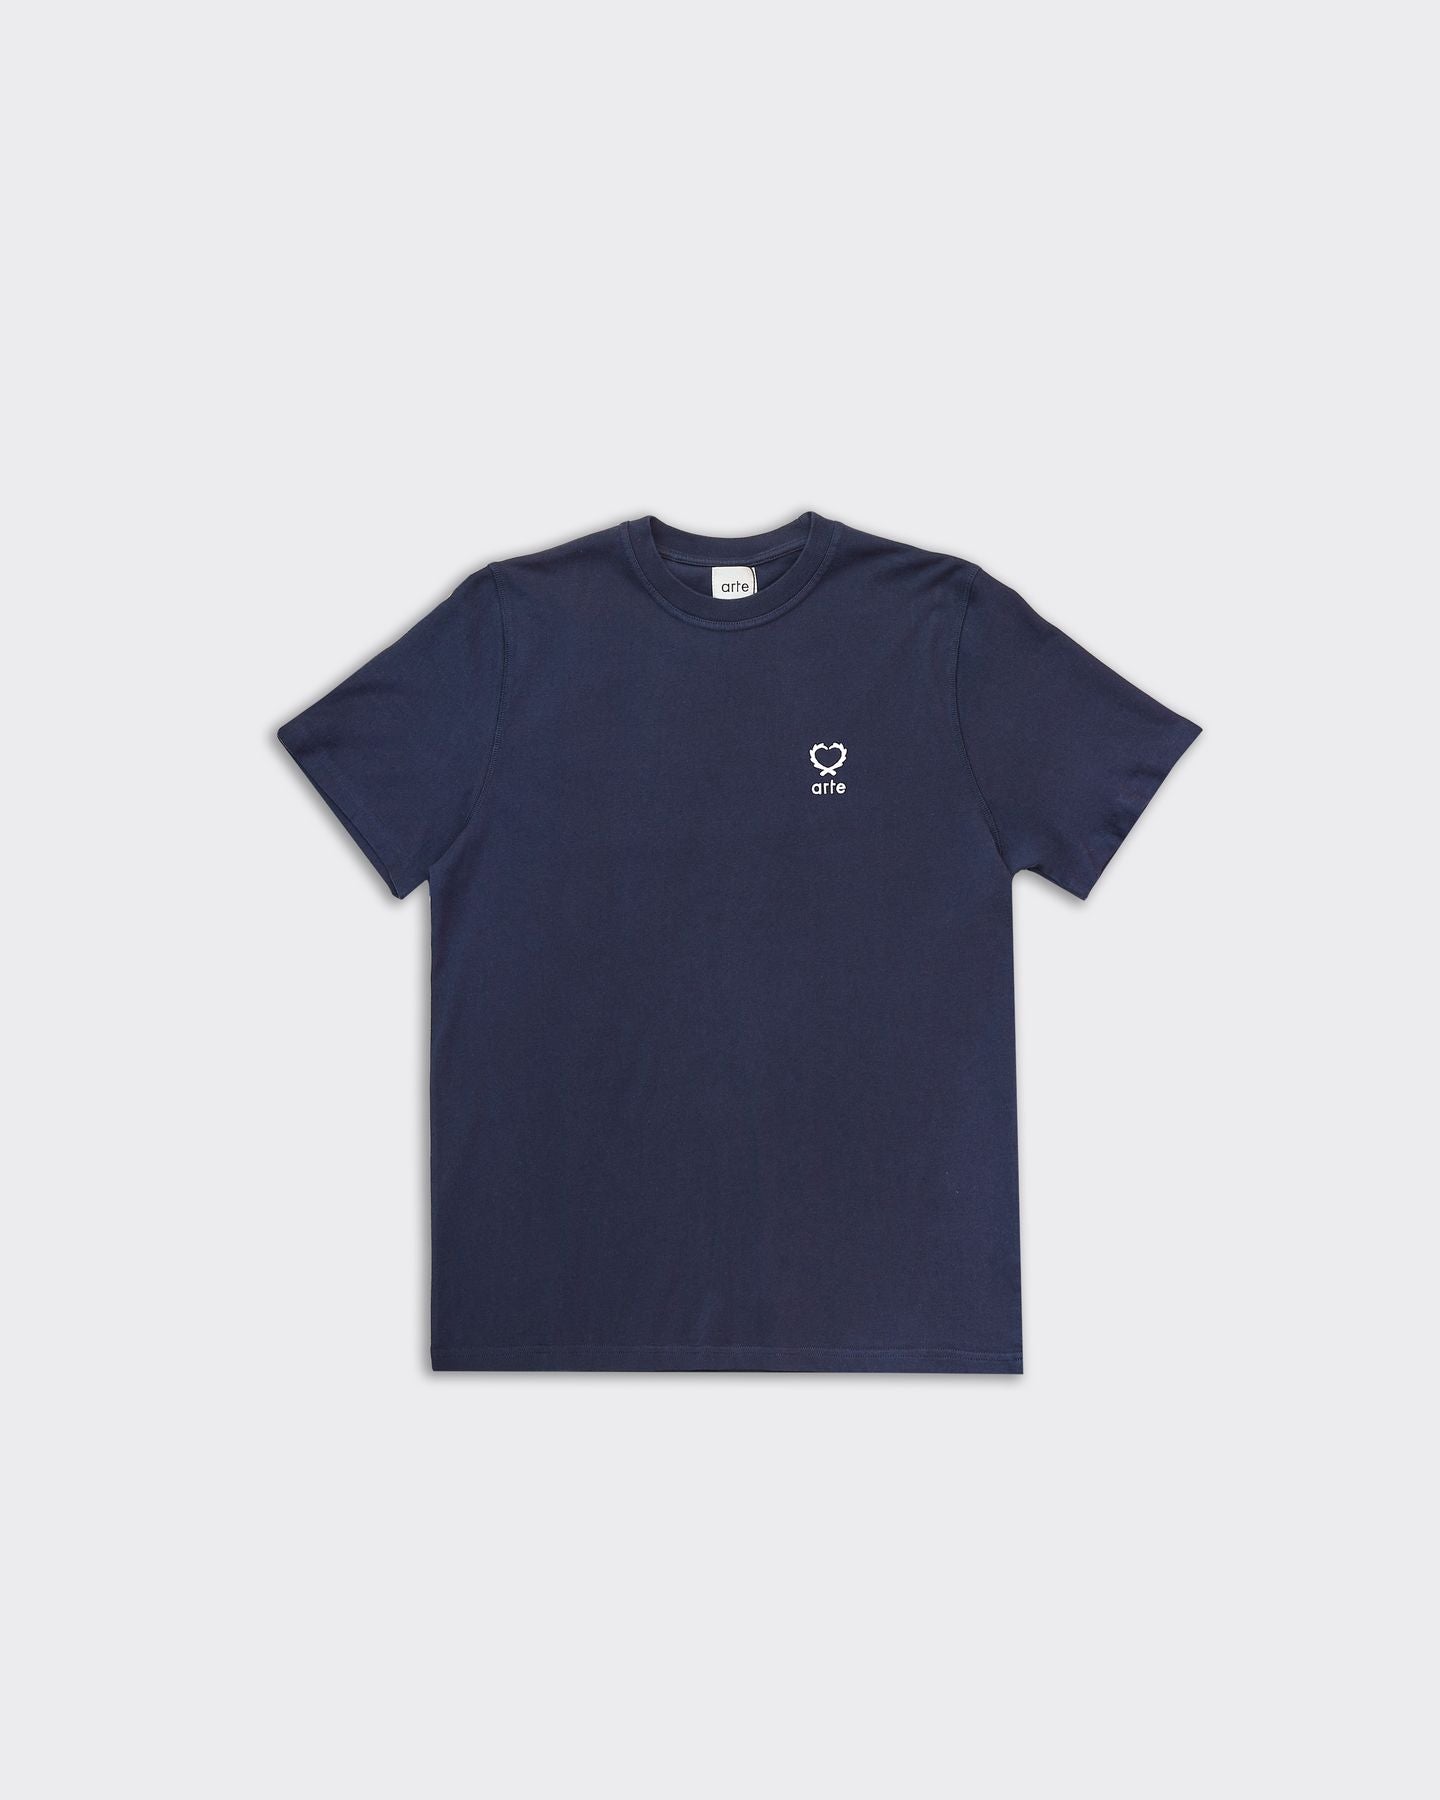 Teo Small Heart T-Shirt Navy Blue